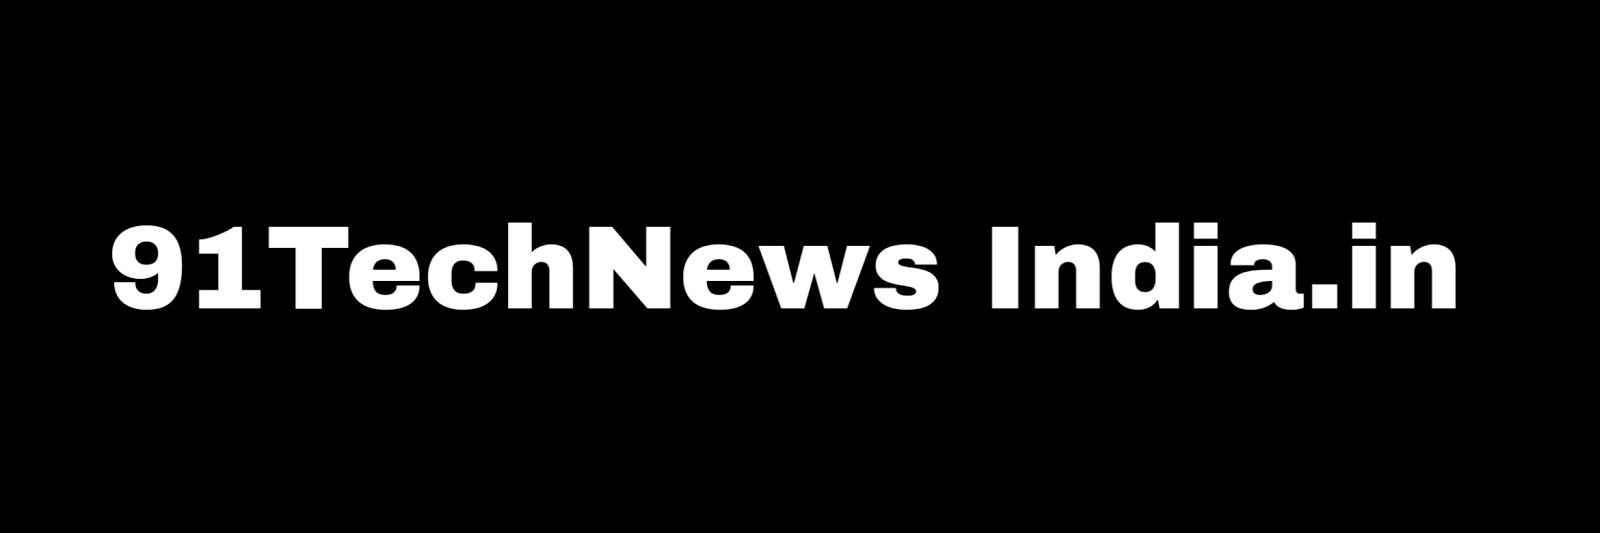 91Tech News India